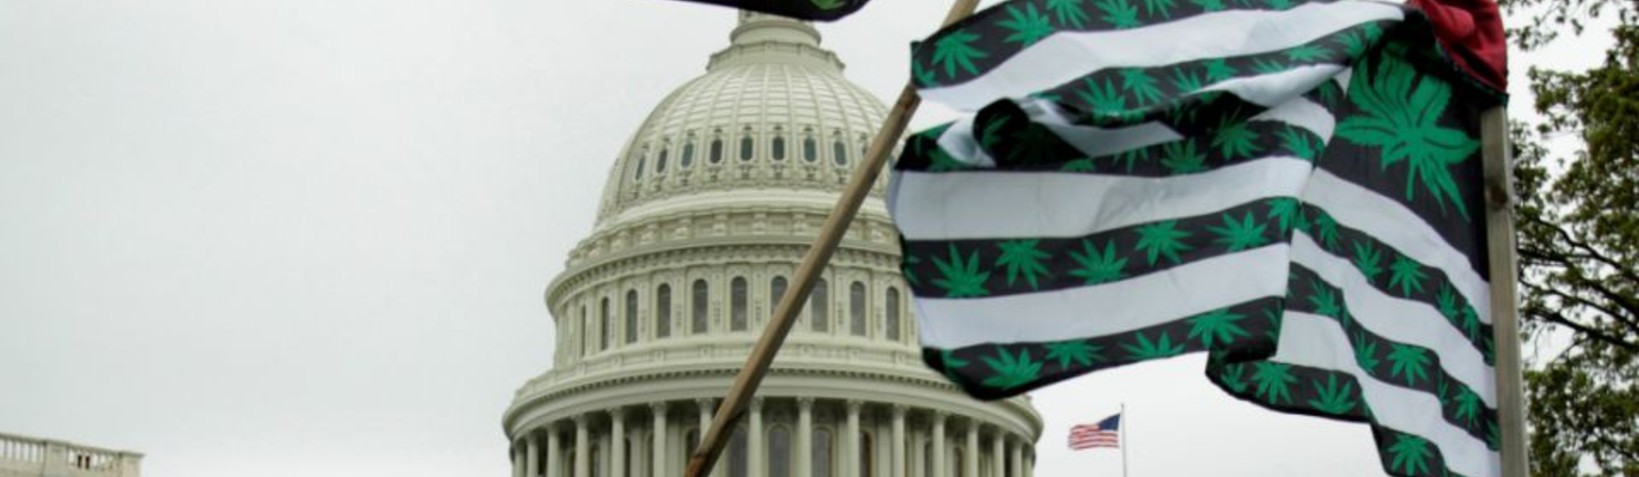 Federal Law on Marijuana